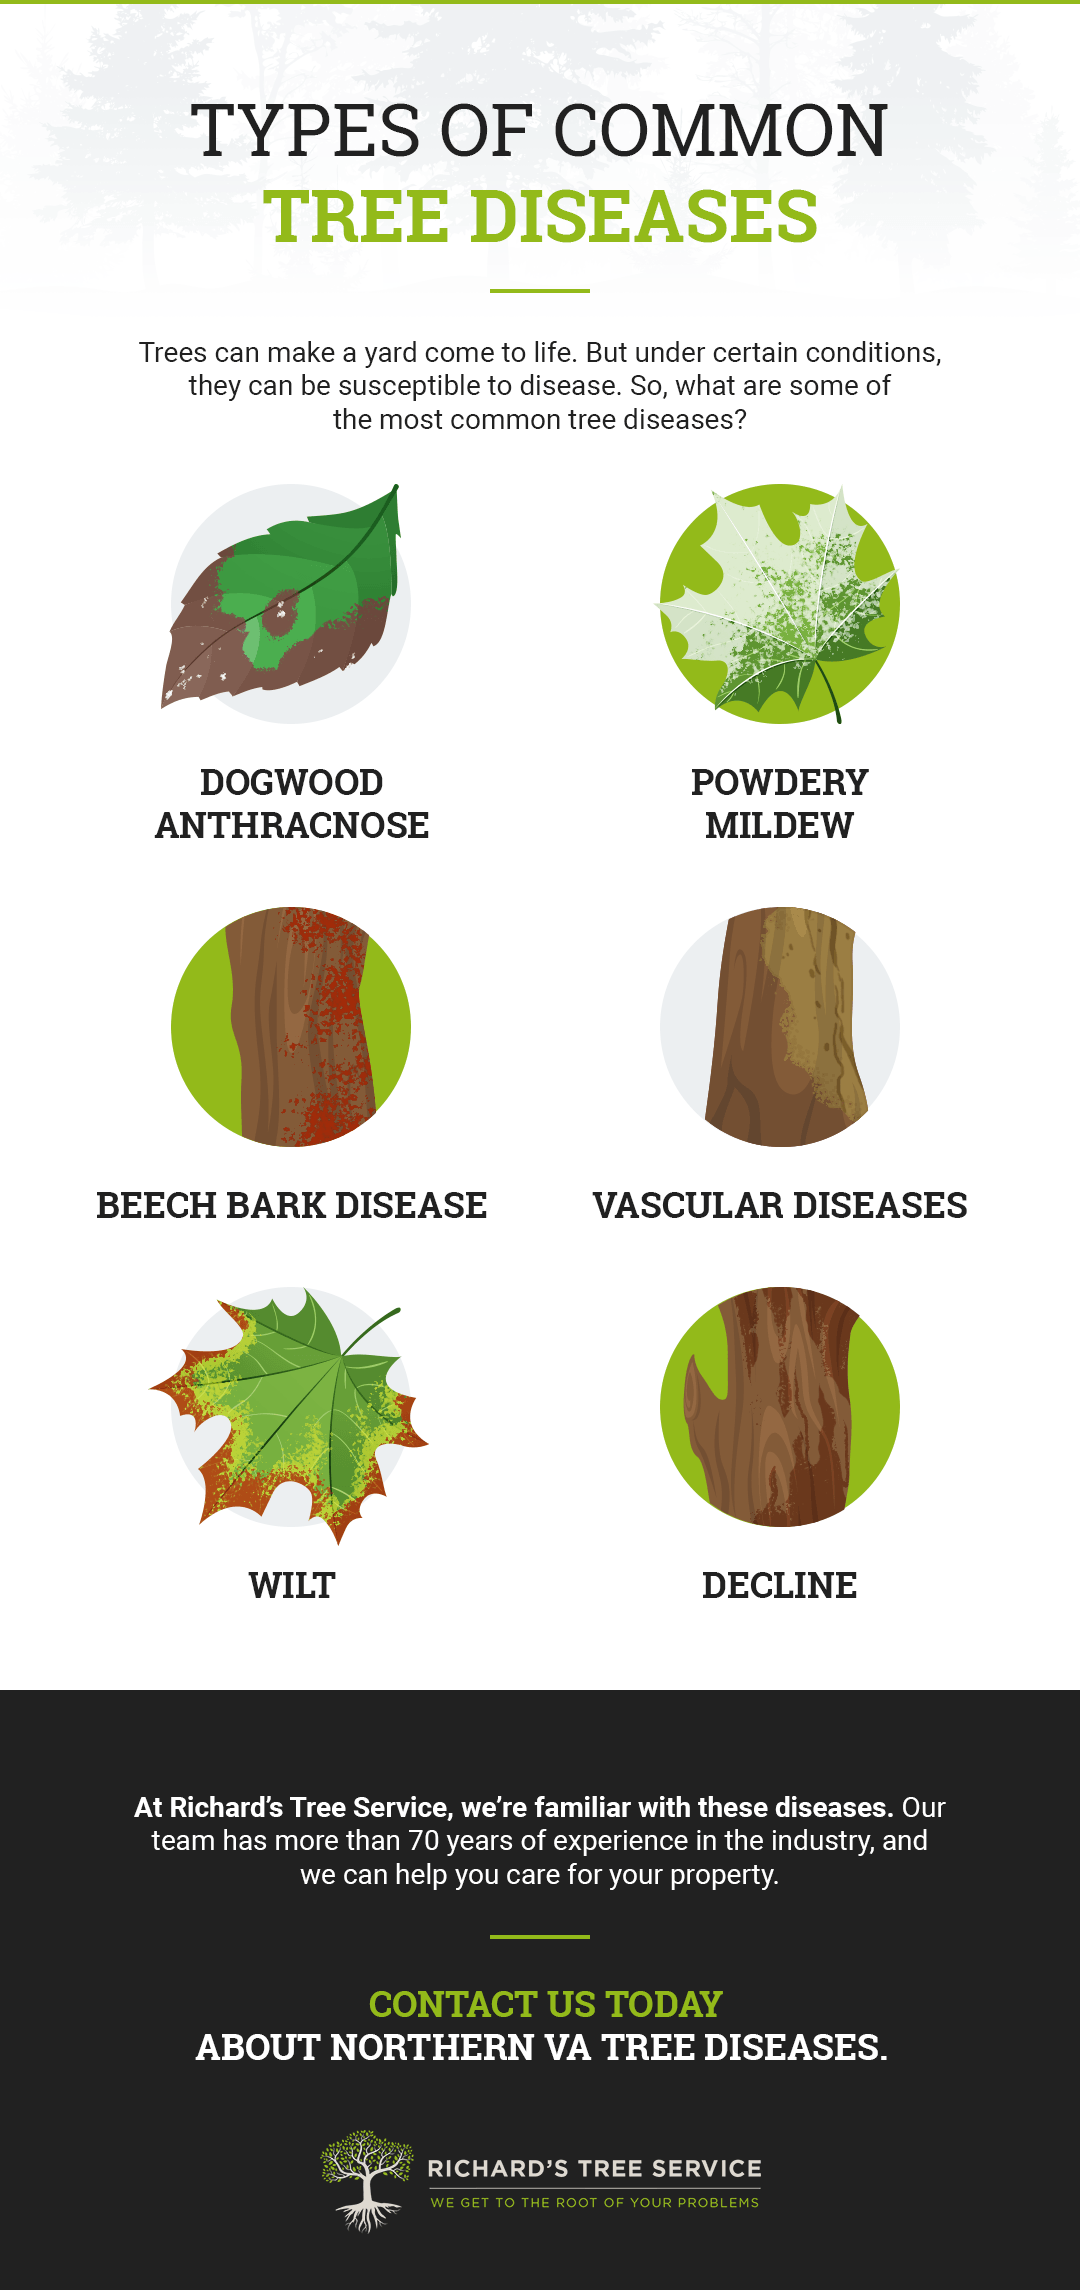 Types of Common Tree Diseases - Dogwood Anthracnose, Powdery Mildew, Beech Bark Disease, Vascular Diseases, Wilt, and Decline